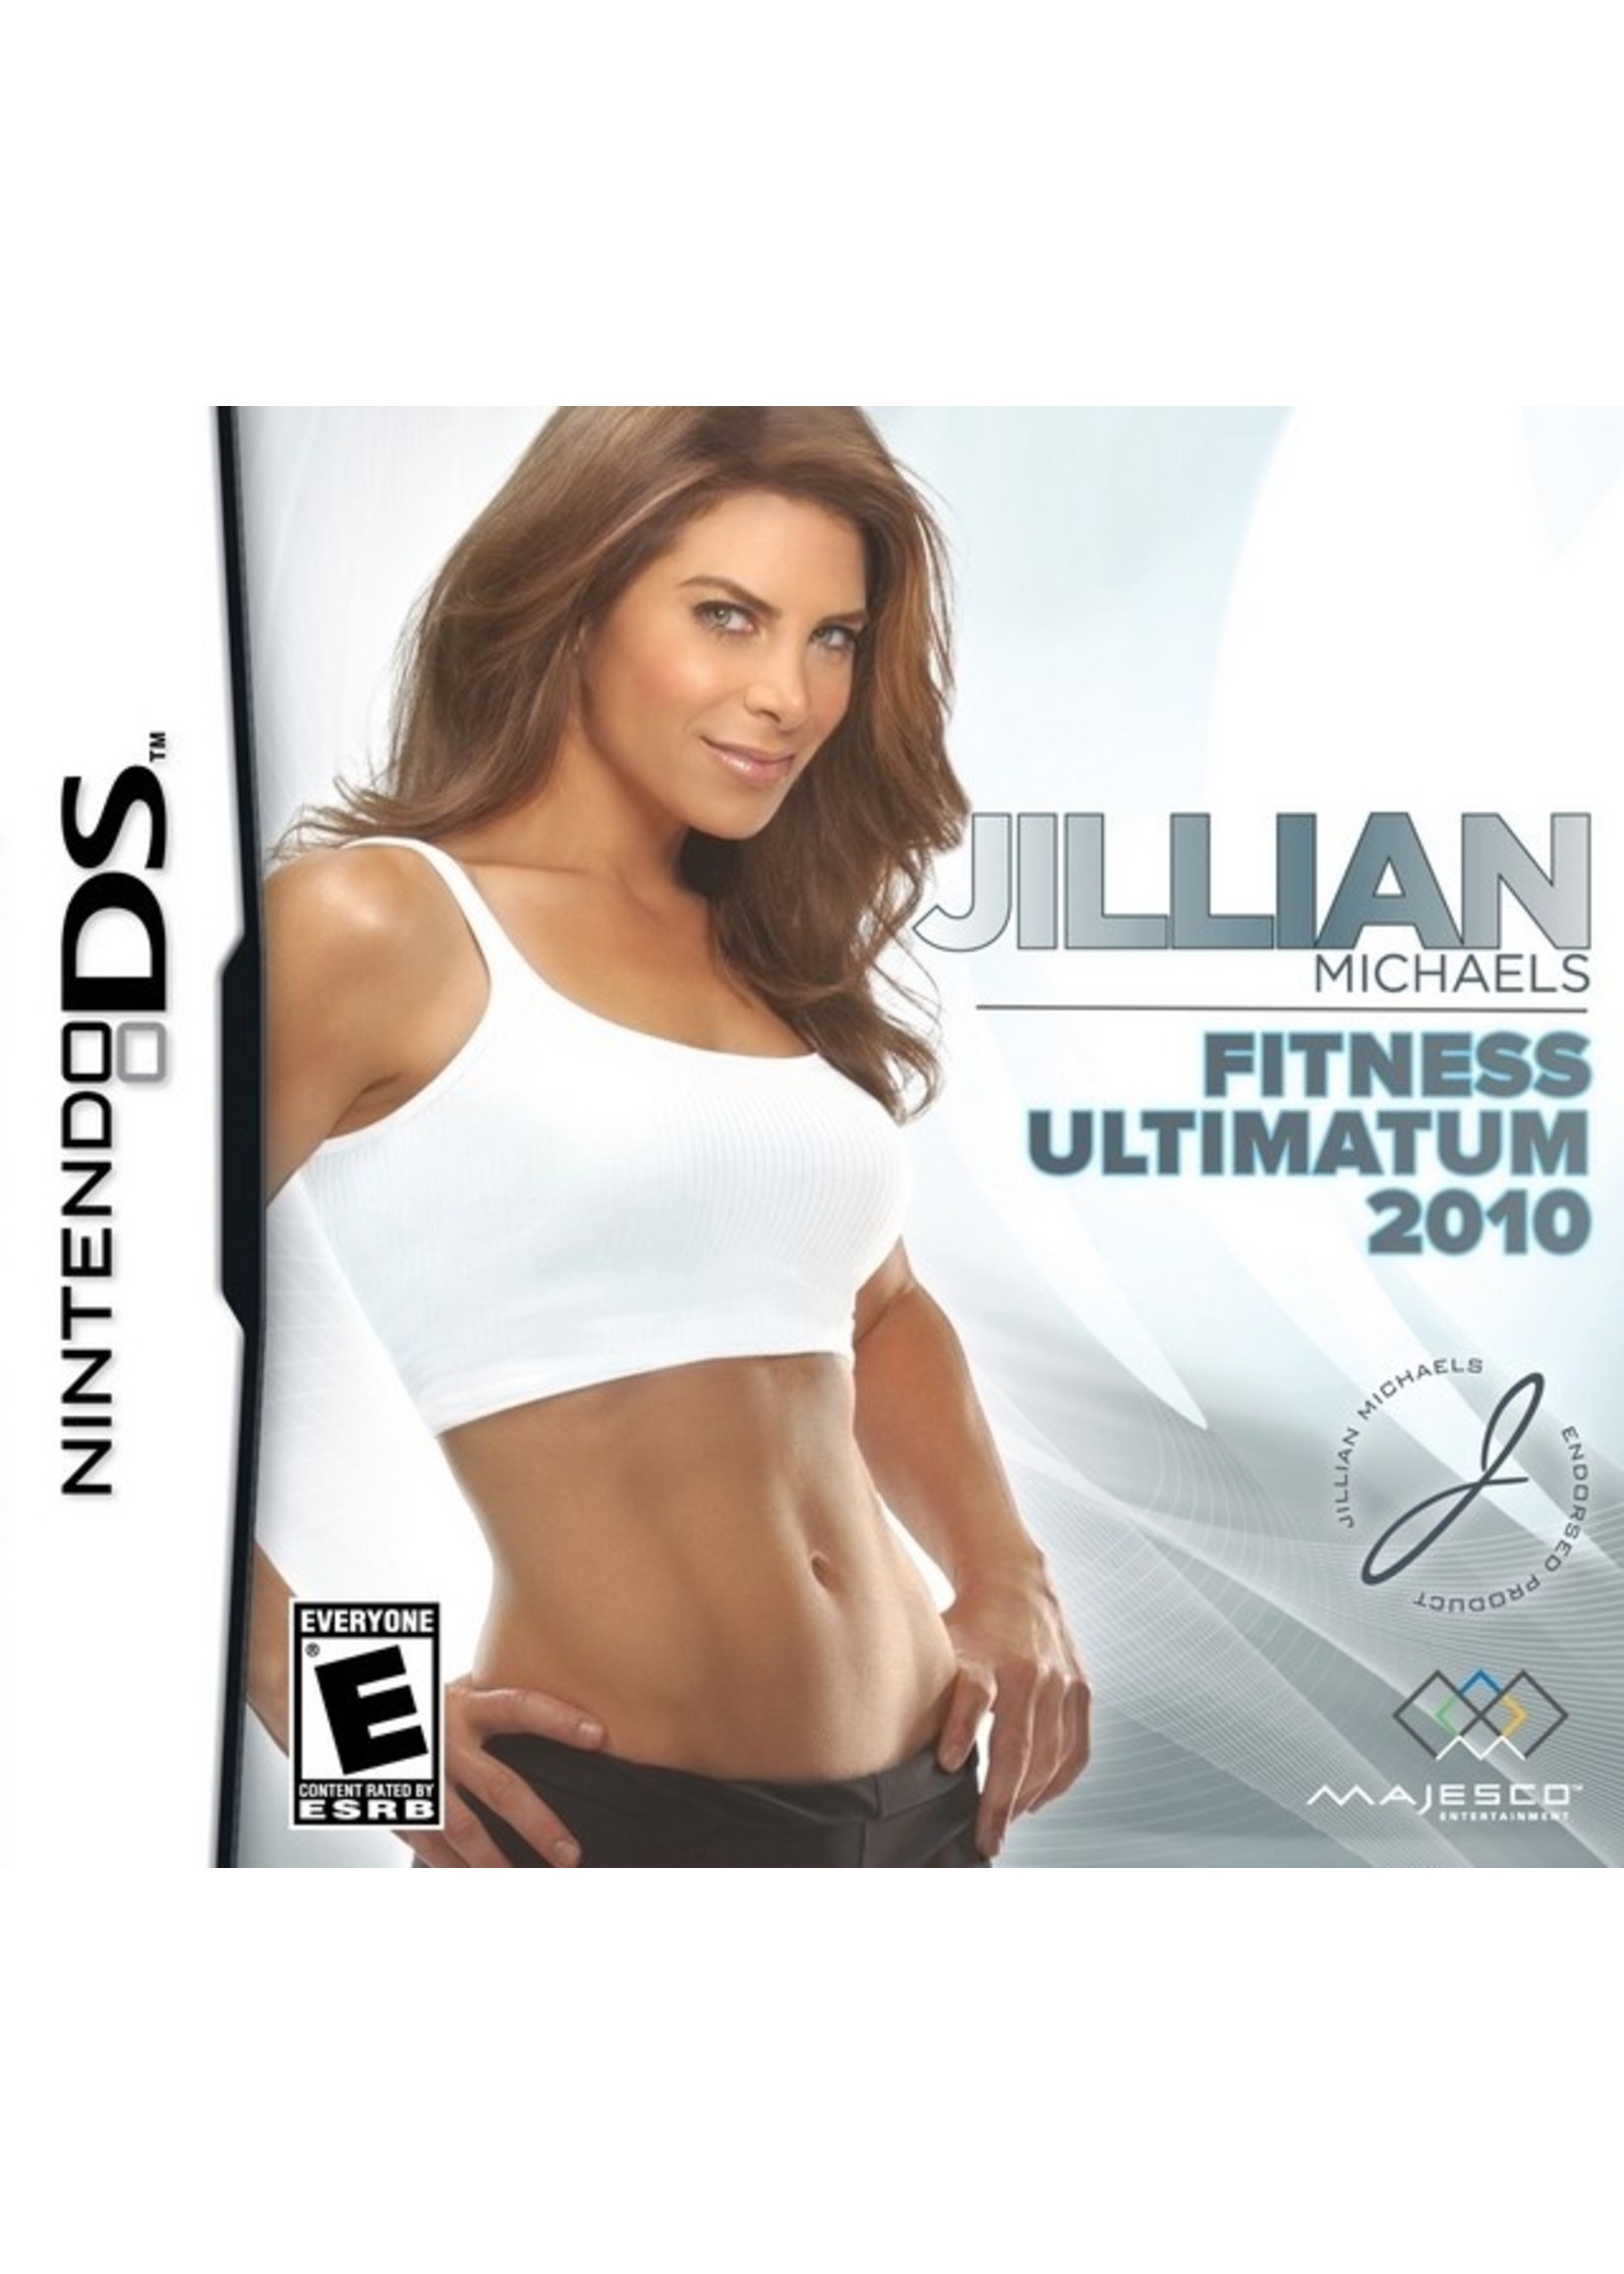 Nintendo DS Jillian Michaels' Fitness Ultimatum 2010